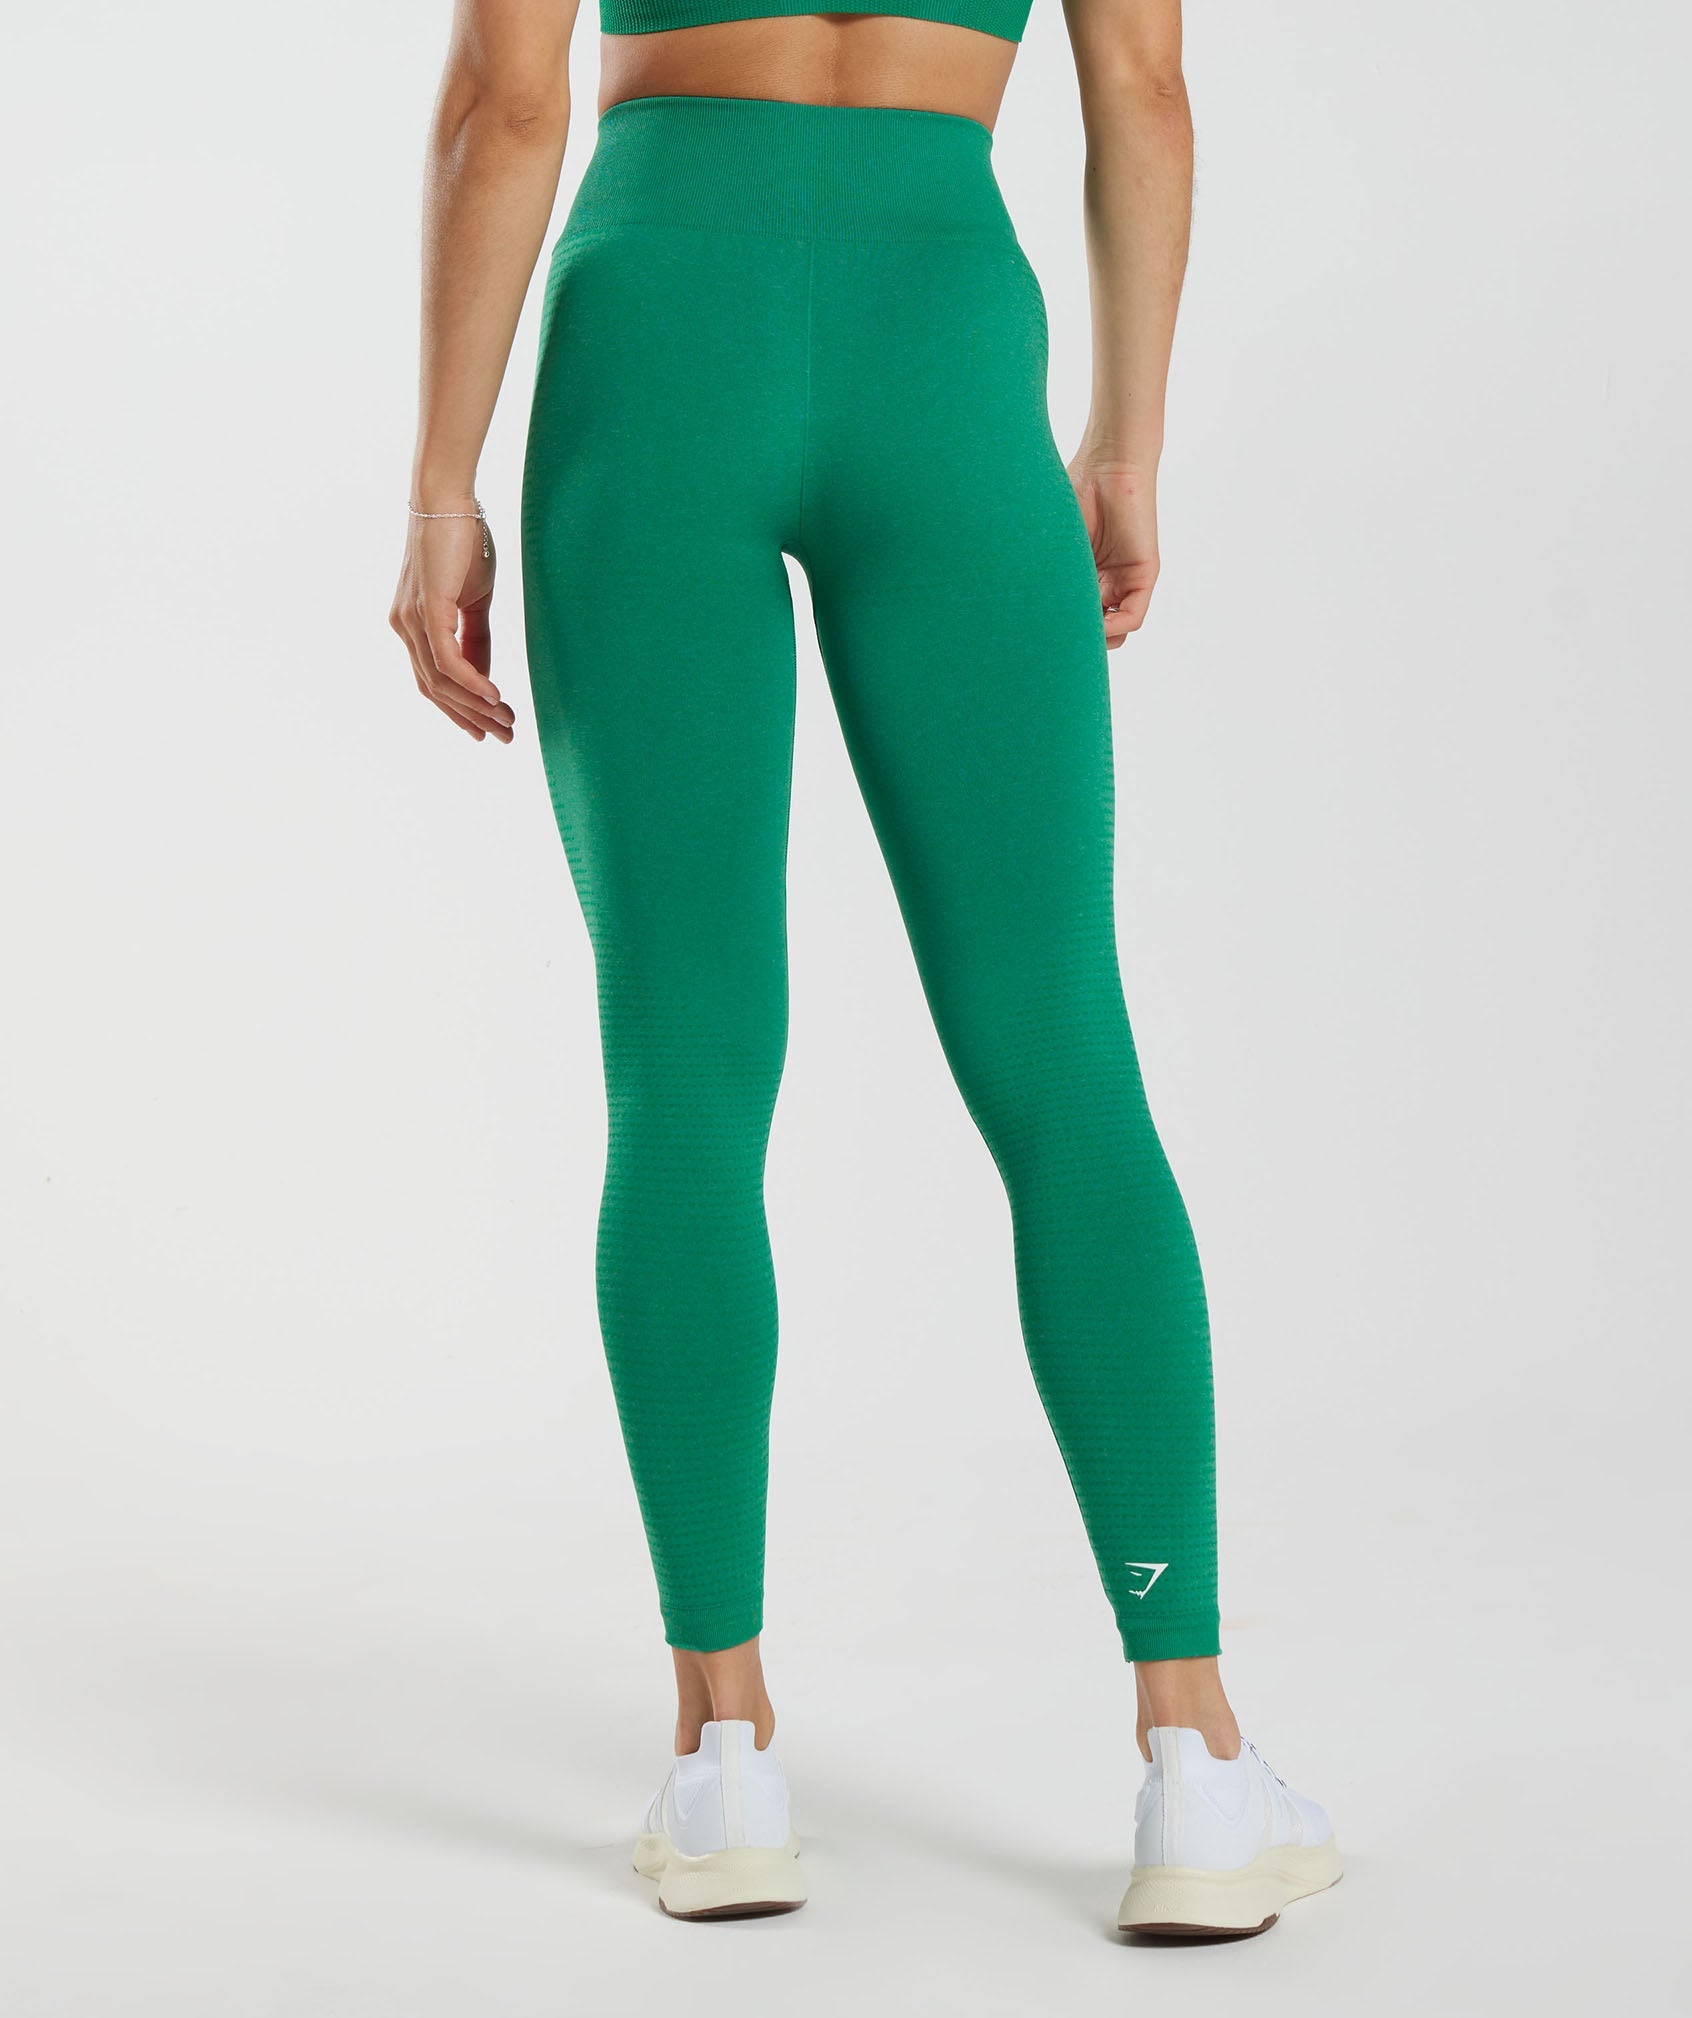 Gymshark Jade Green Chalk Leggings Size XS